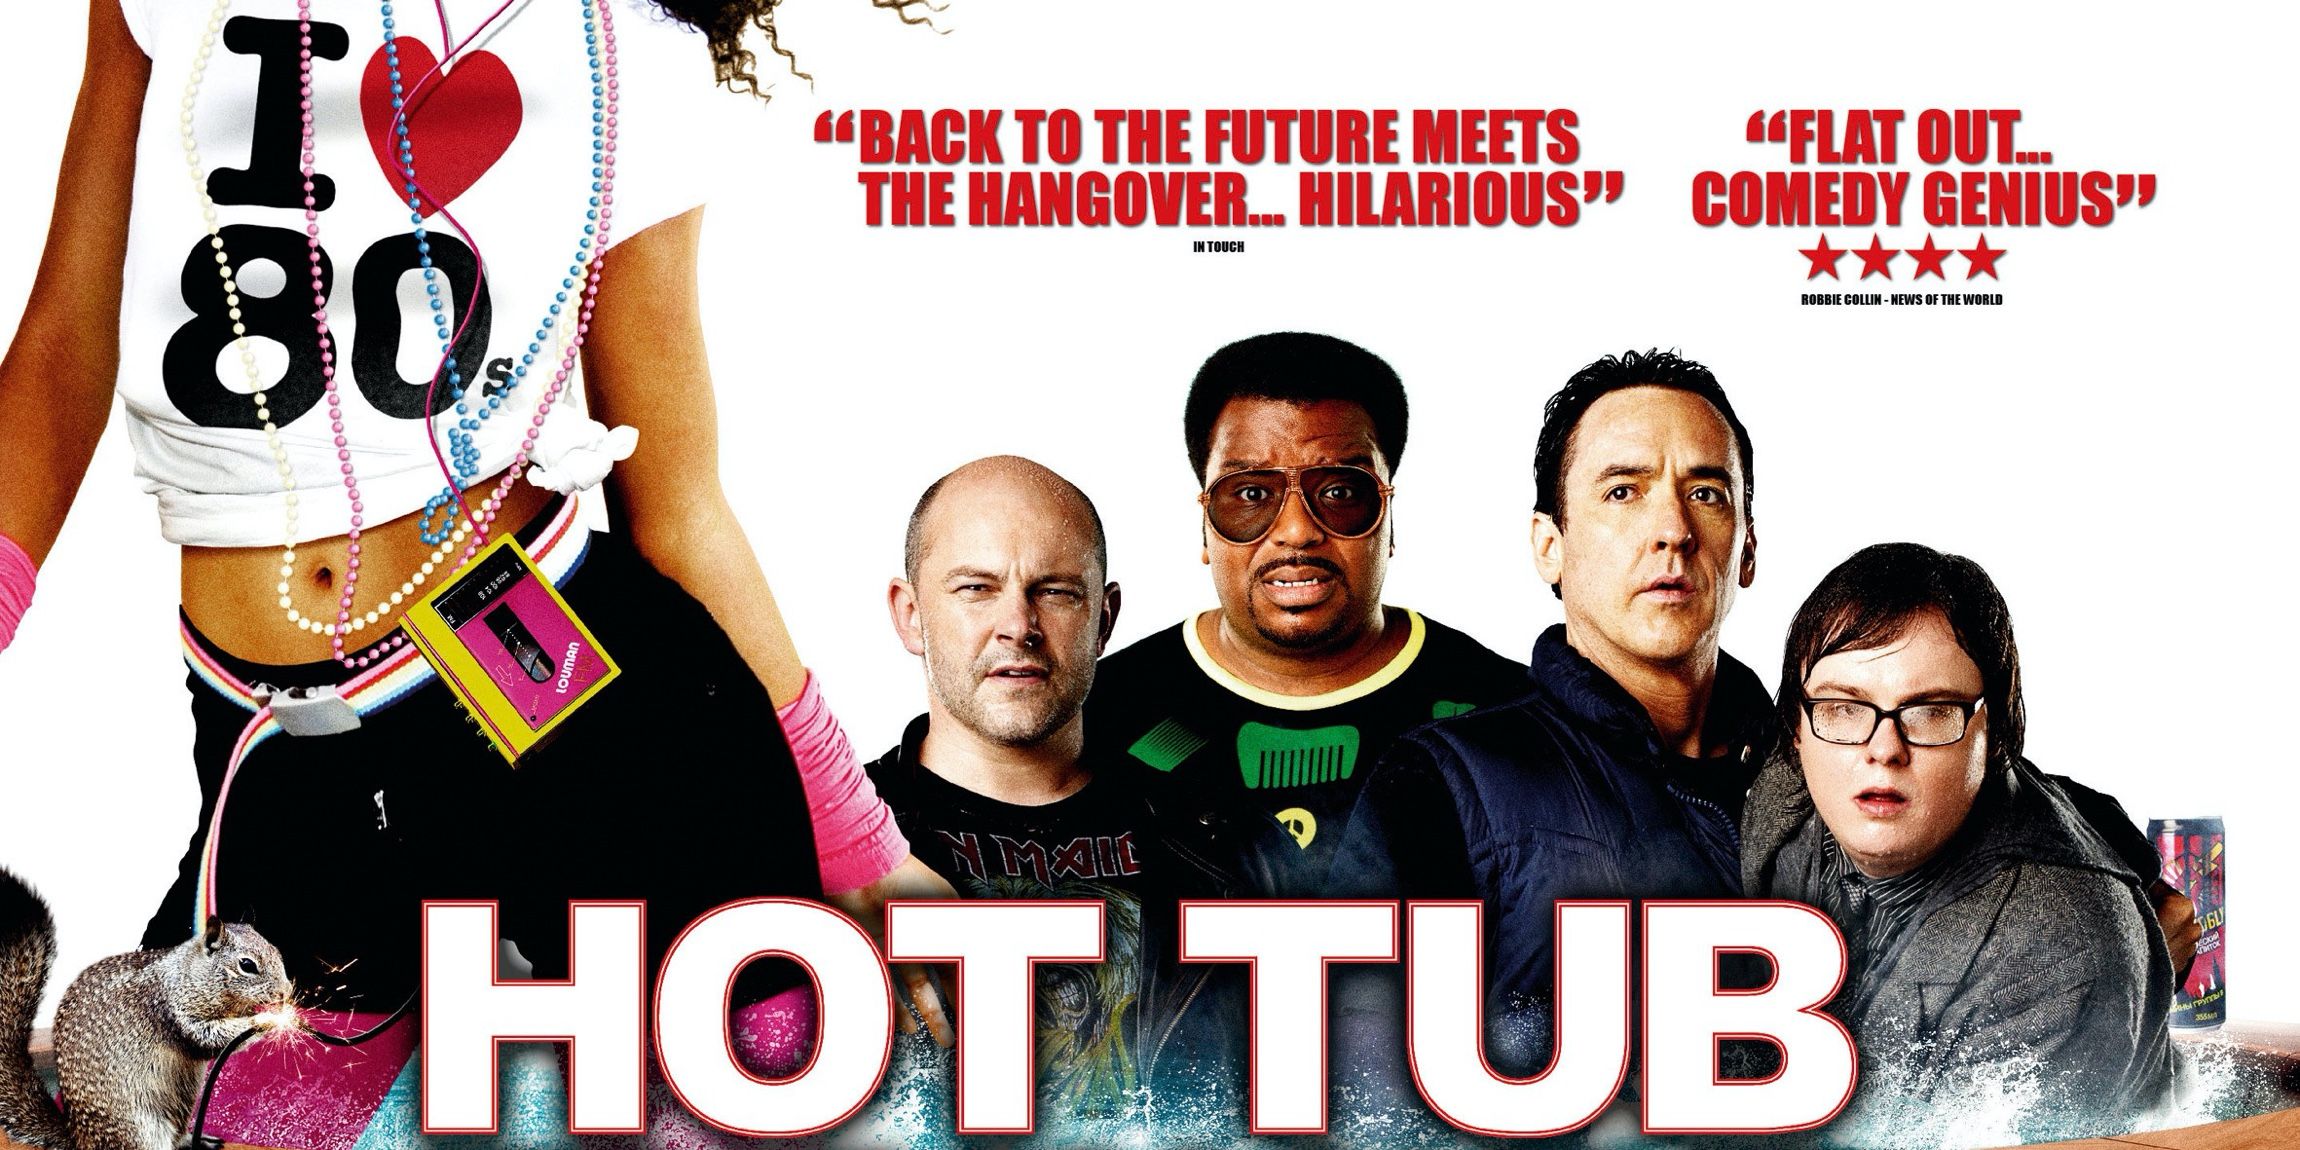 Hot Tub Time Machine movie reviews